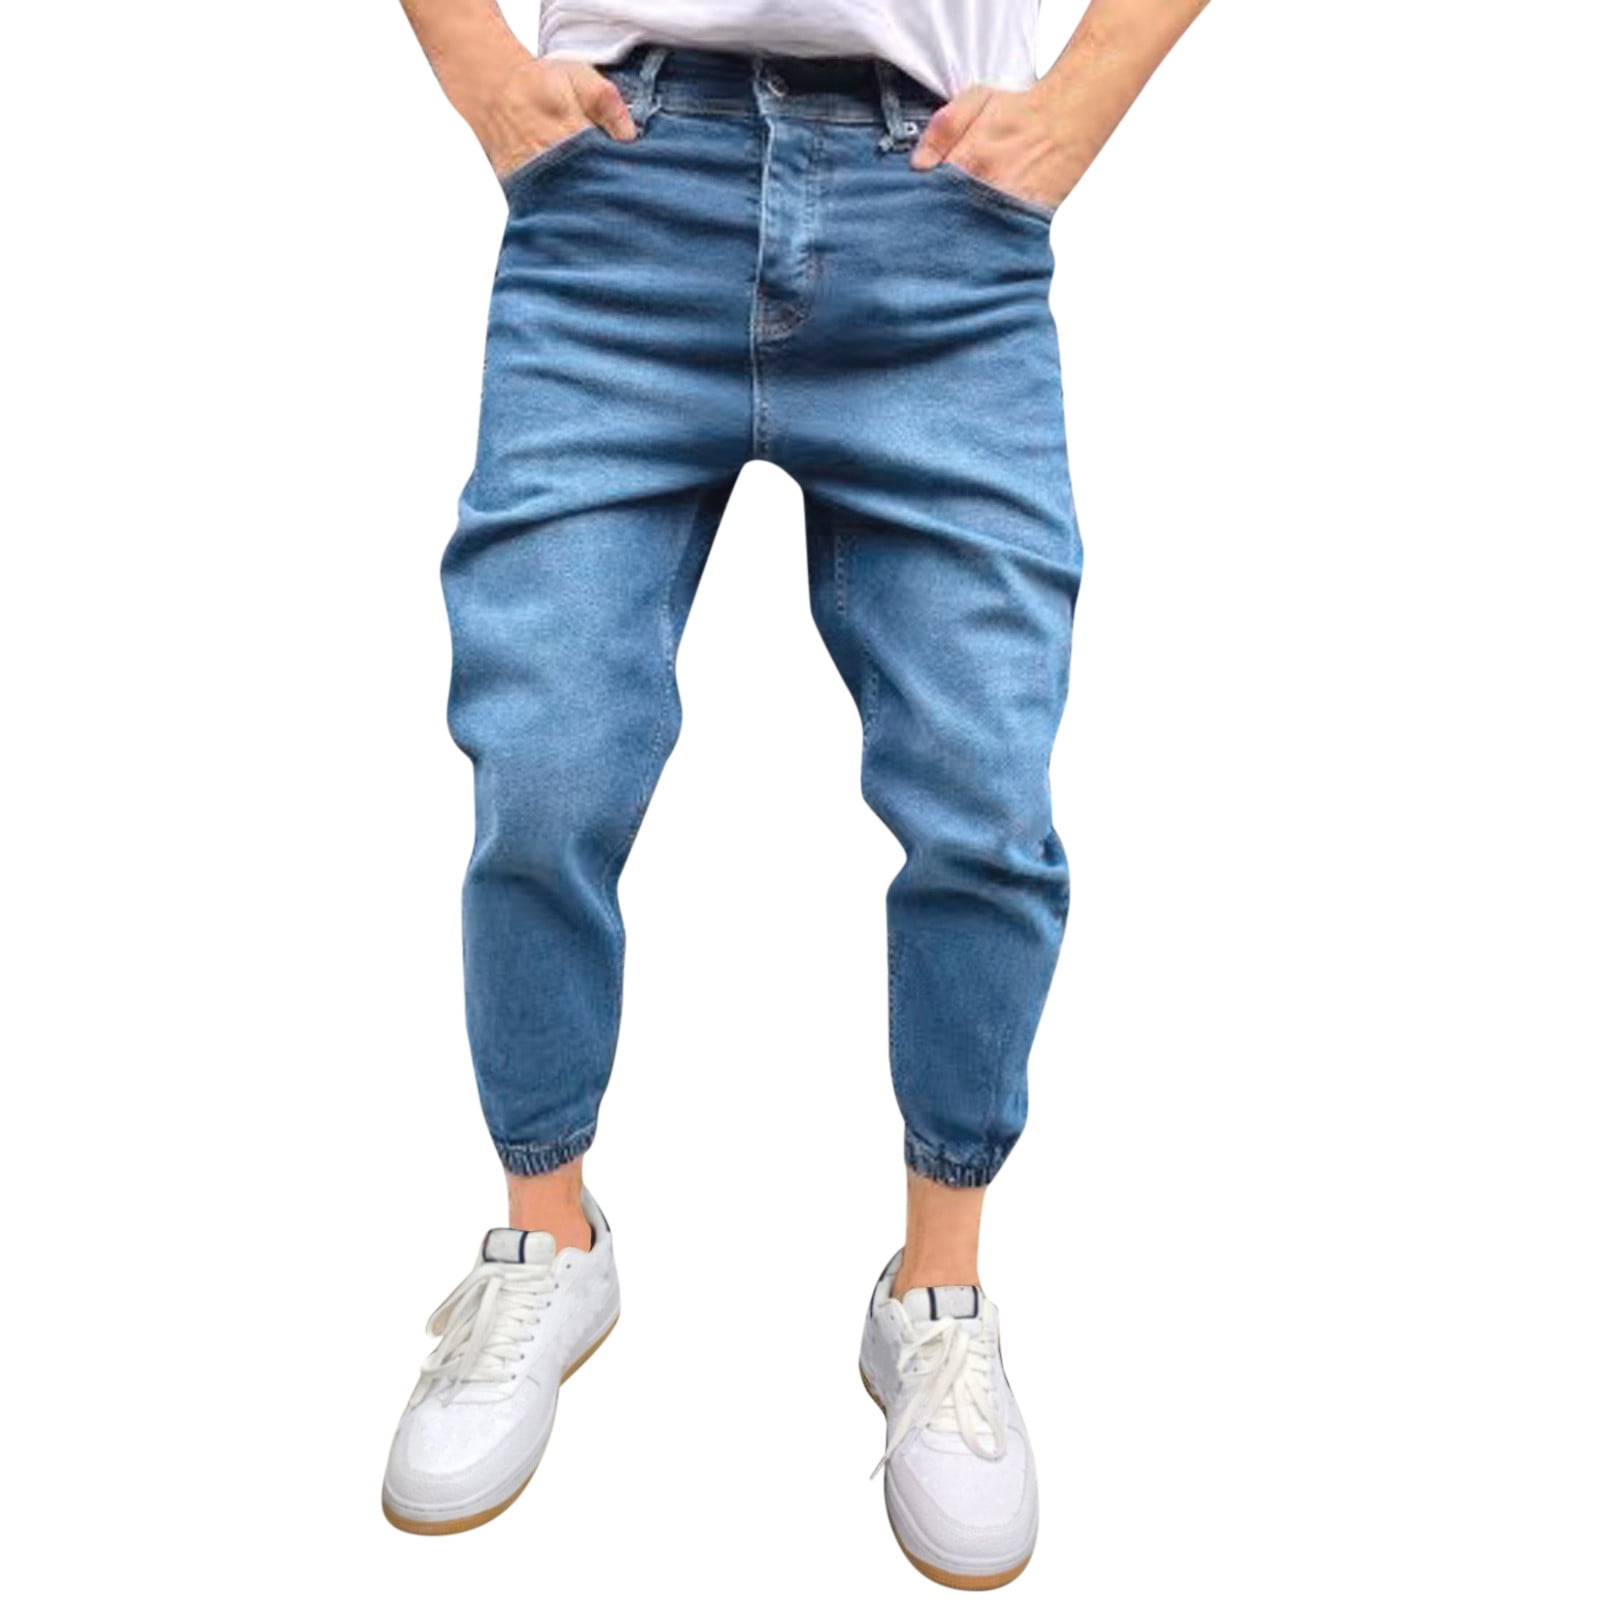 Zppruwei Men'S Casual Solid Denim Jogger Pants Zipper Fly Pocket Jeans ...